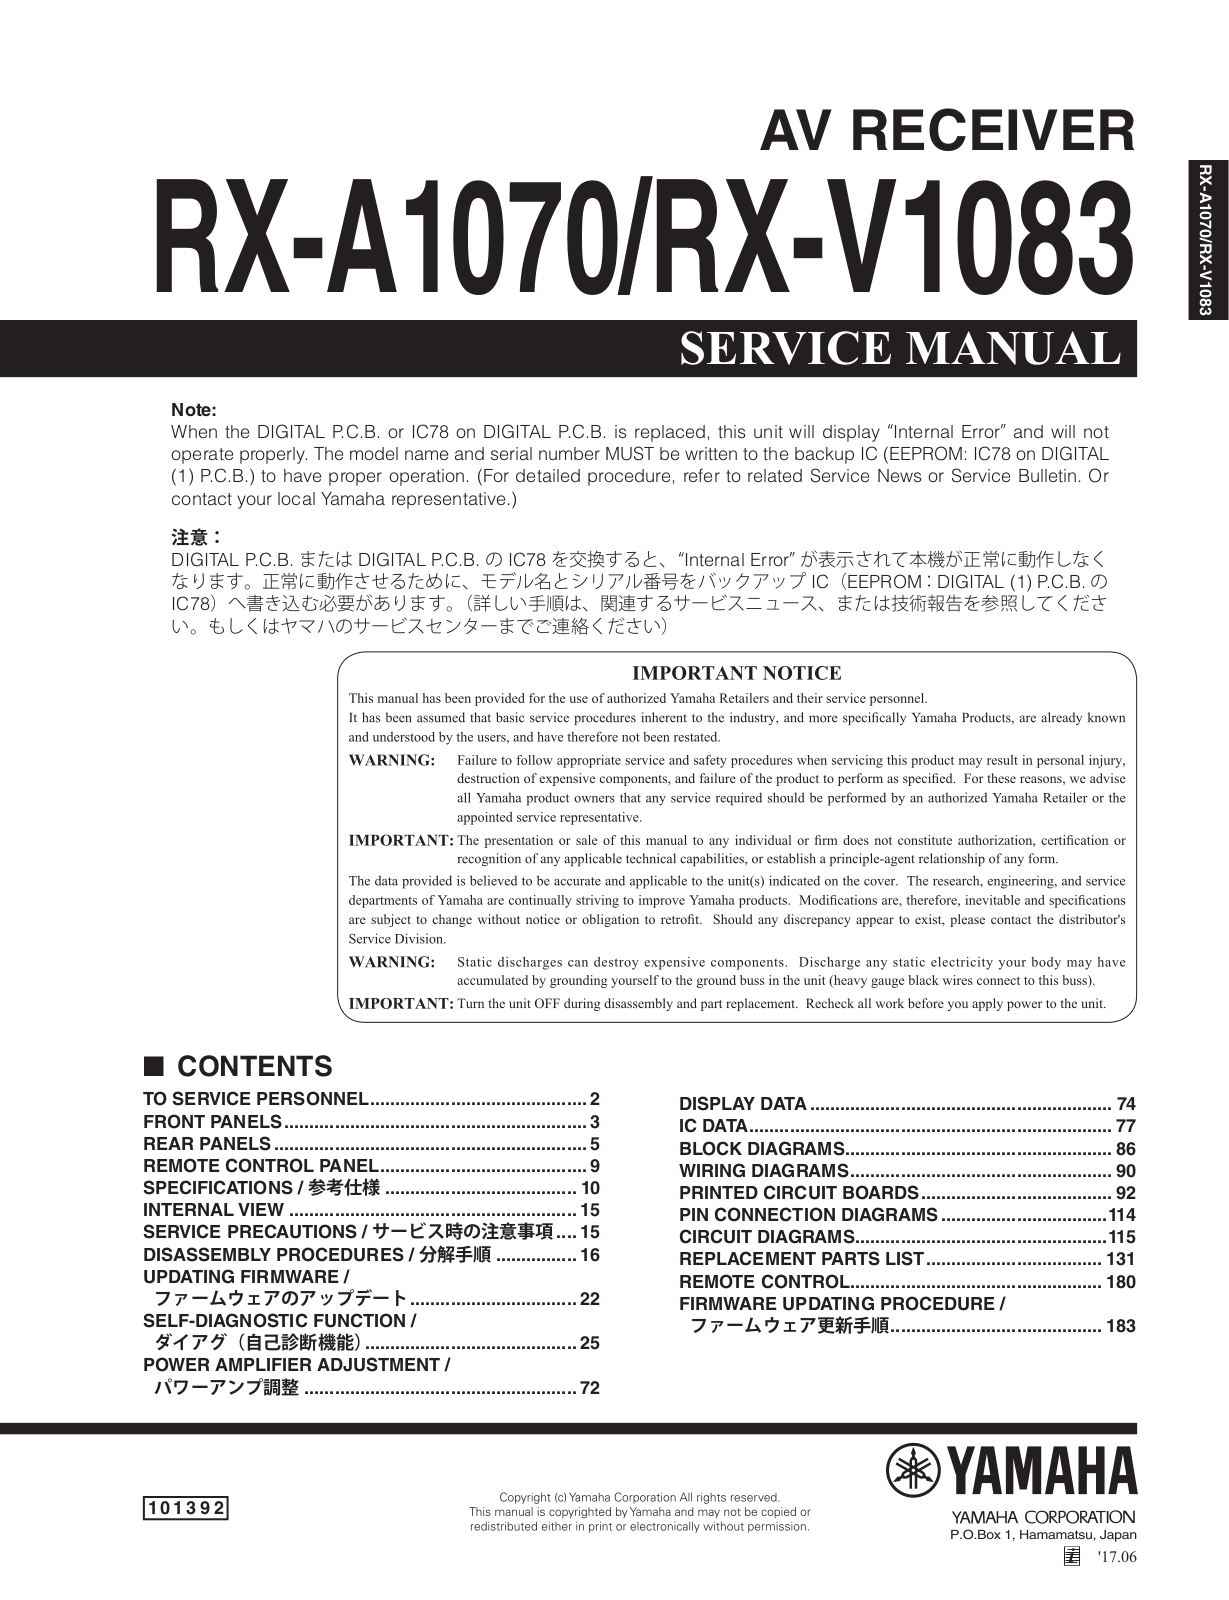 Yamaha RX-A1070, RX-V1083 Service manual